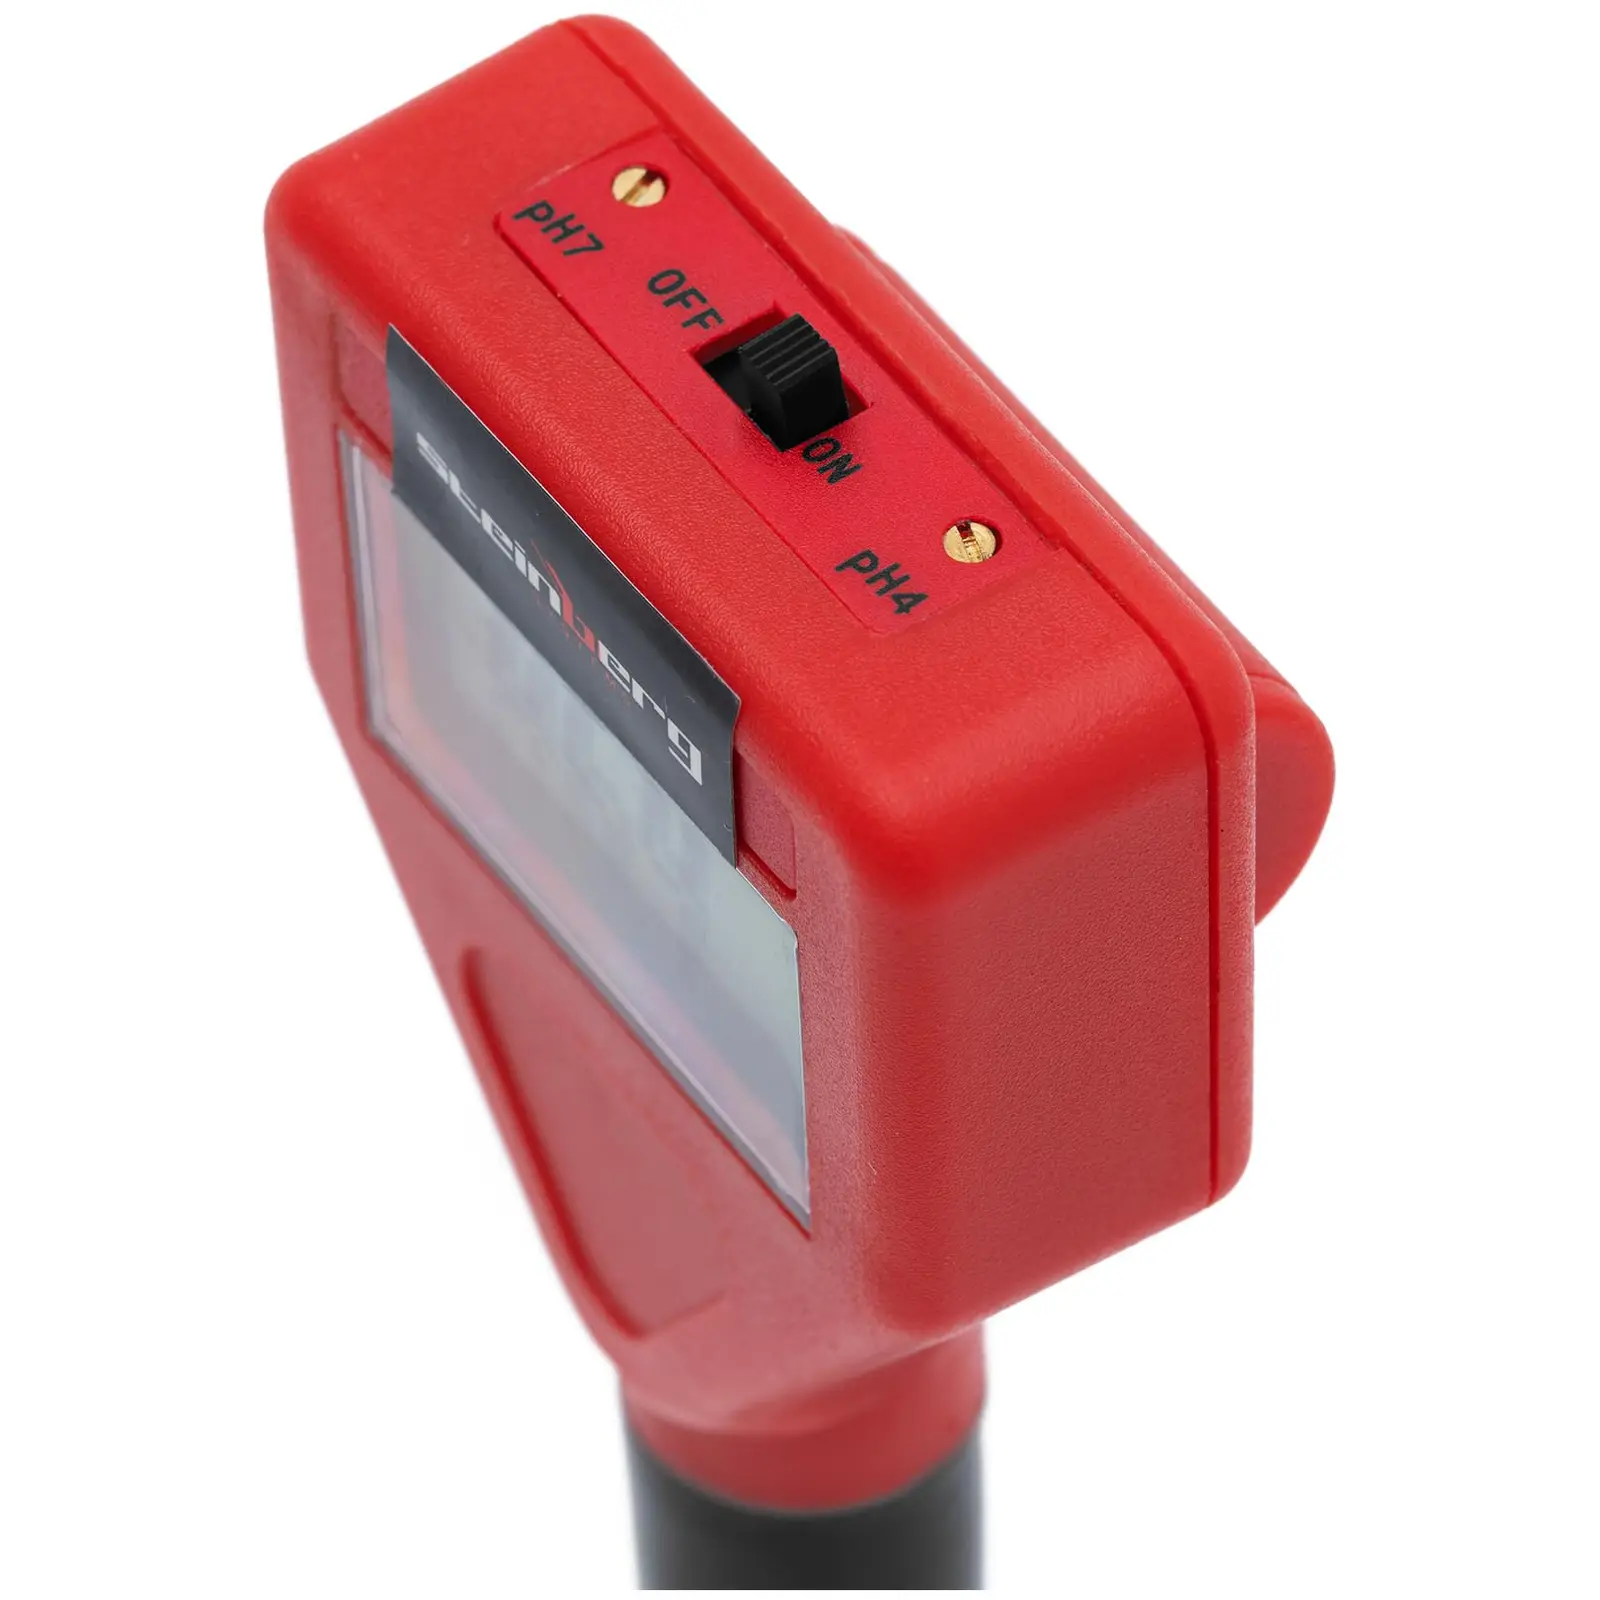 pH-mittari anturilla - LCD - 0 - 14 pH